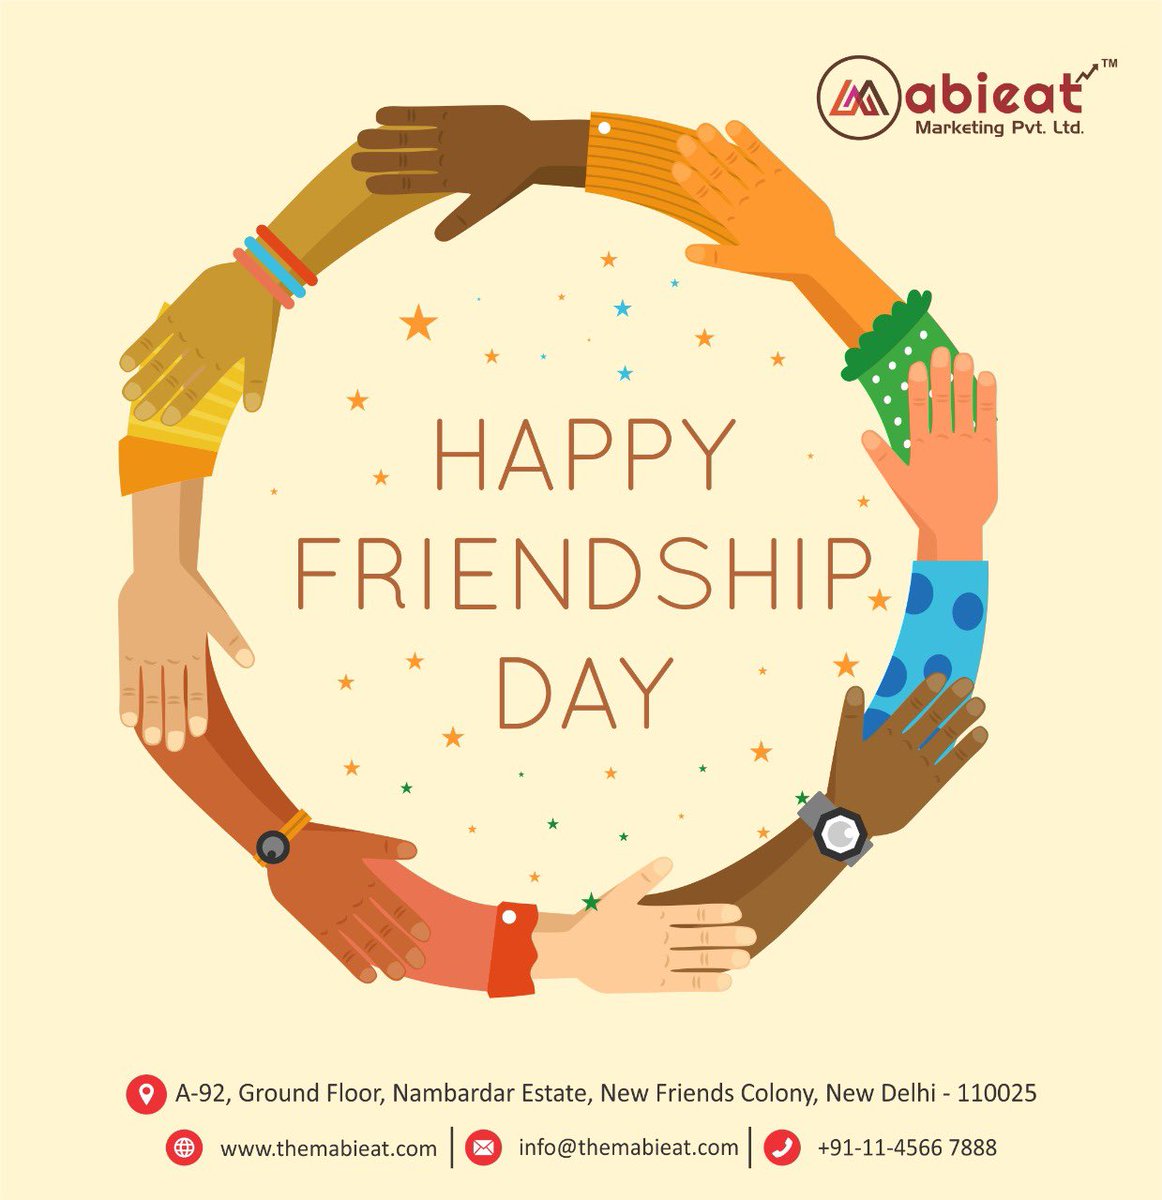 Happy friendship day to all friends near and far!

#happyfriendshipday2021 #mabieatmarketing #clubmabieat